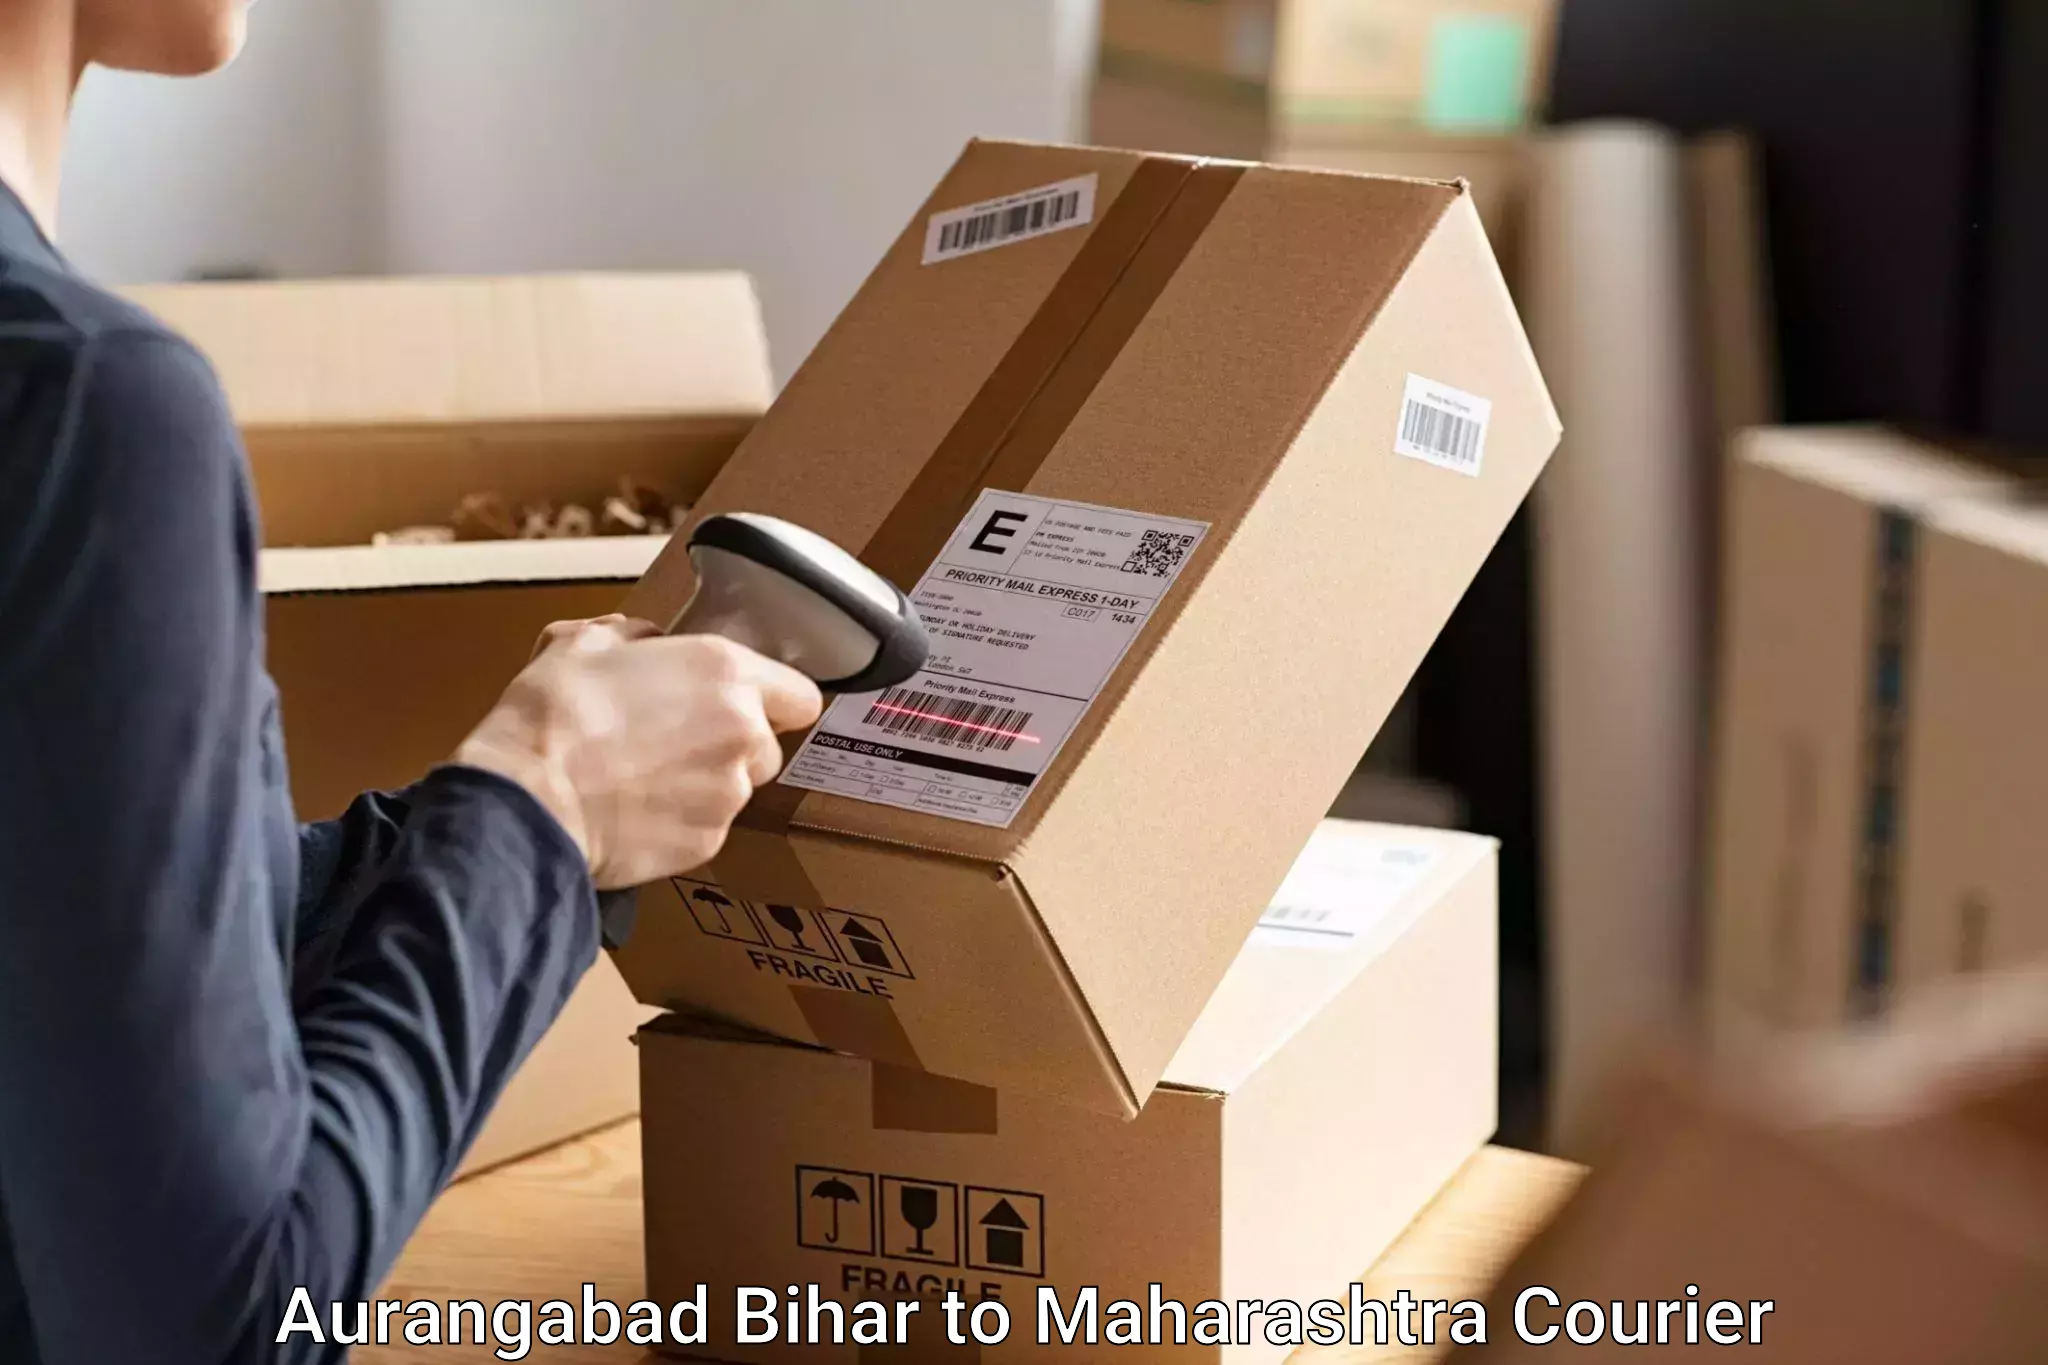 Luggage transport consultancy Aurangabad Bihar to Dindori Nashik